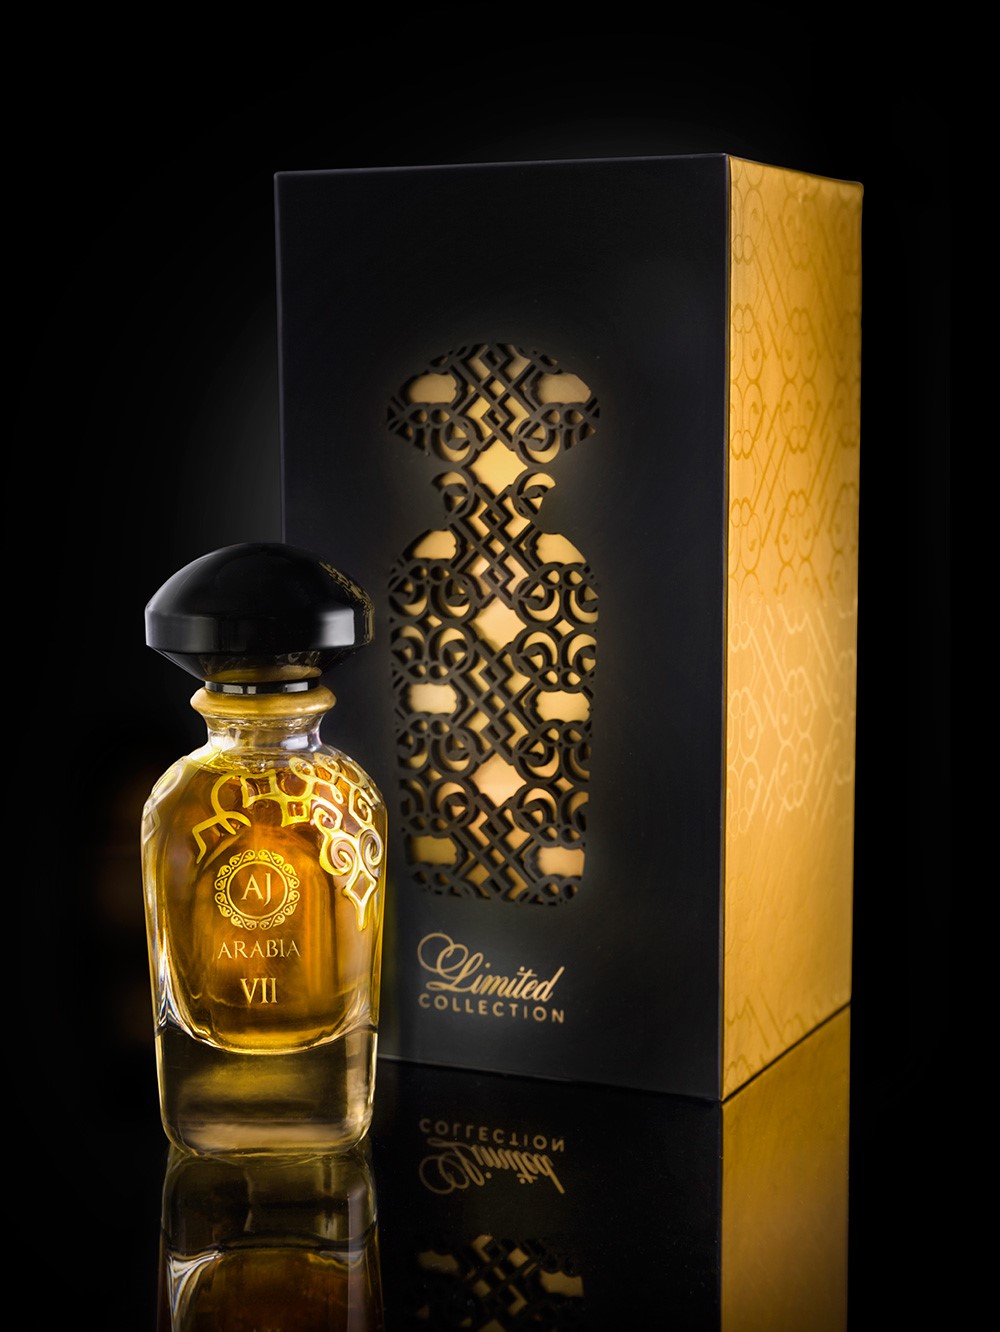 Arabia 1. AJ Arabia II духи 50мл. AJ Arabia Black collection II Parfum 50m. AJ Arabia Widian Gold collection i Parfum. AJ Arabia Widian Gold collection II Parfum.